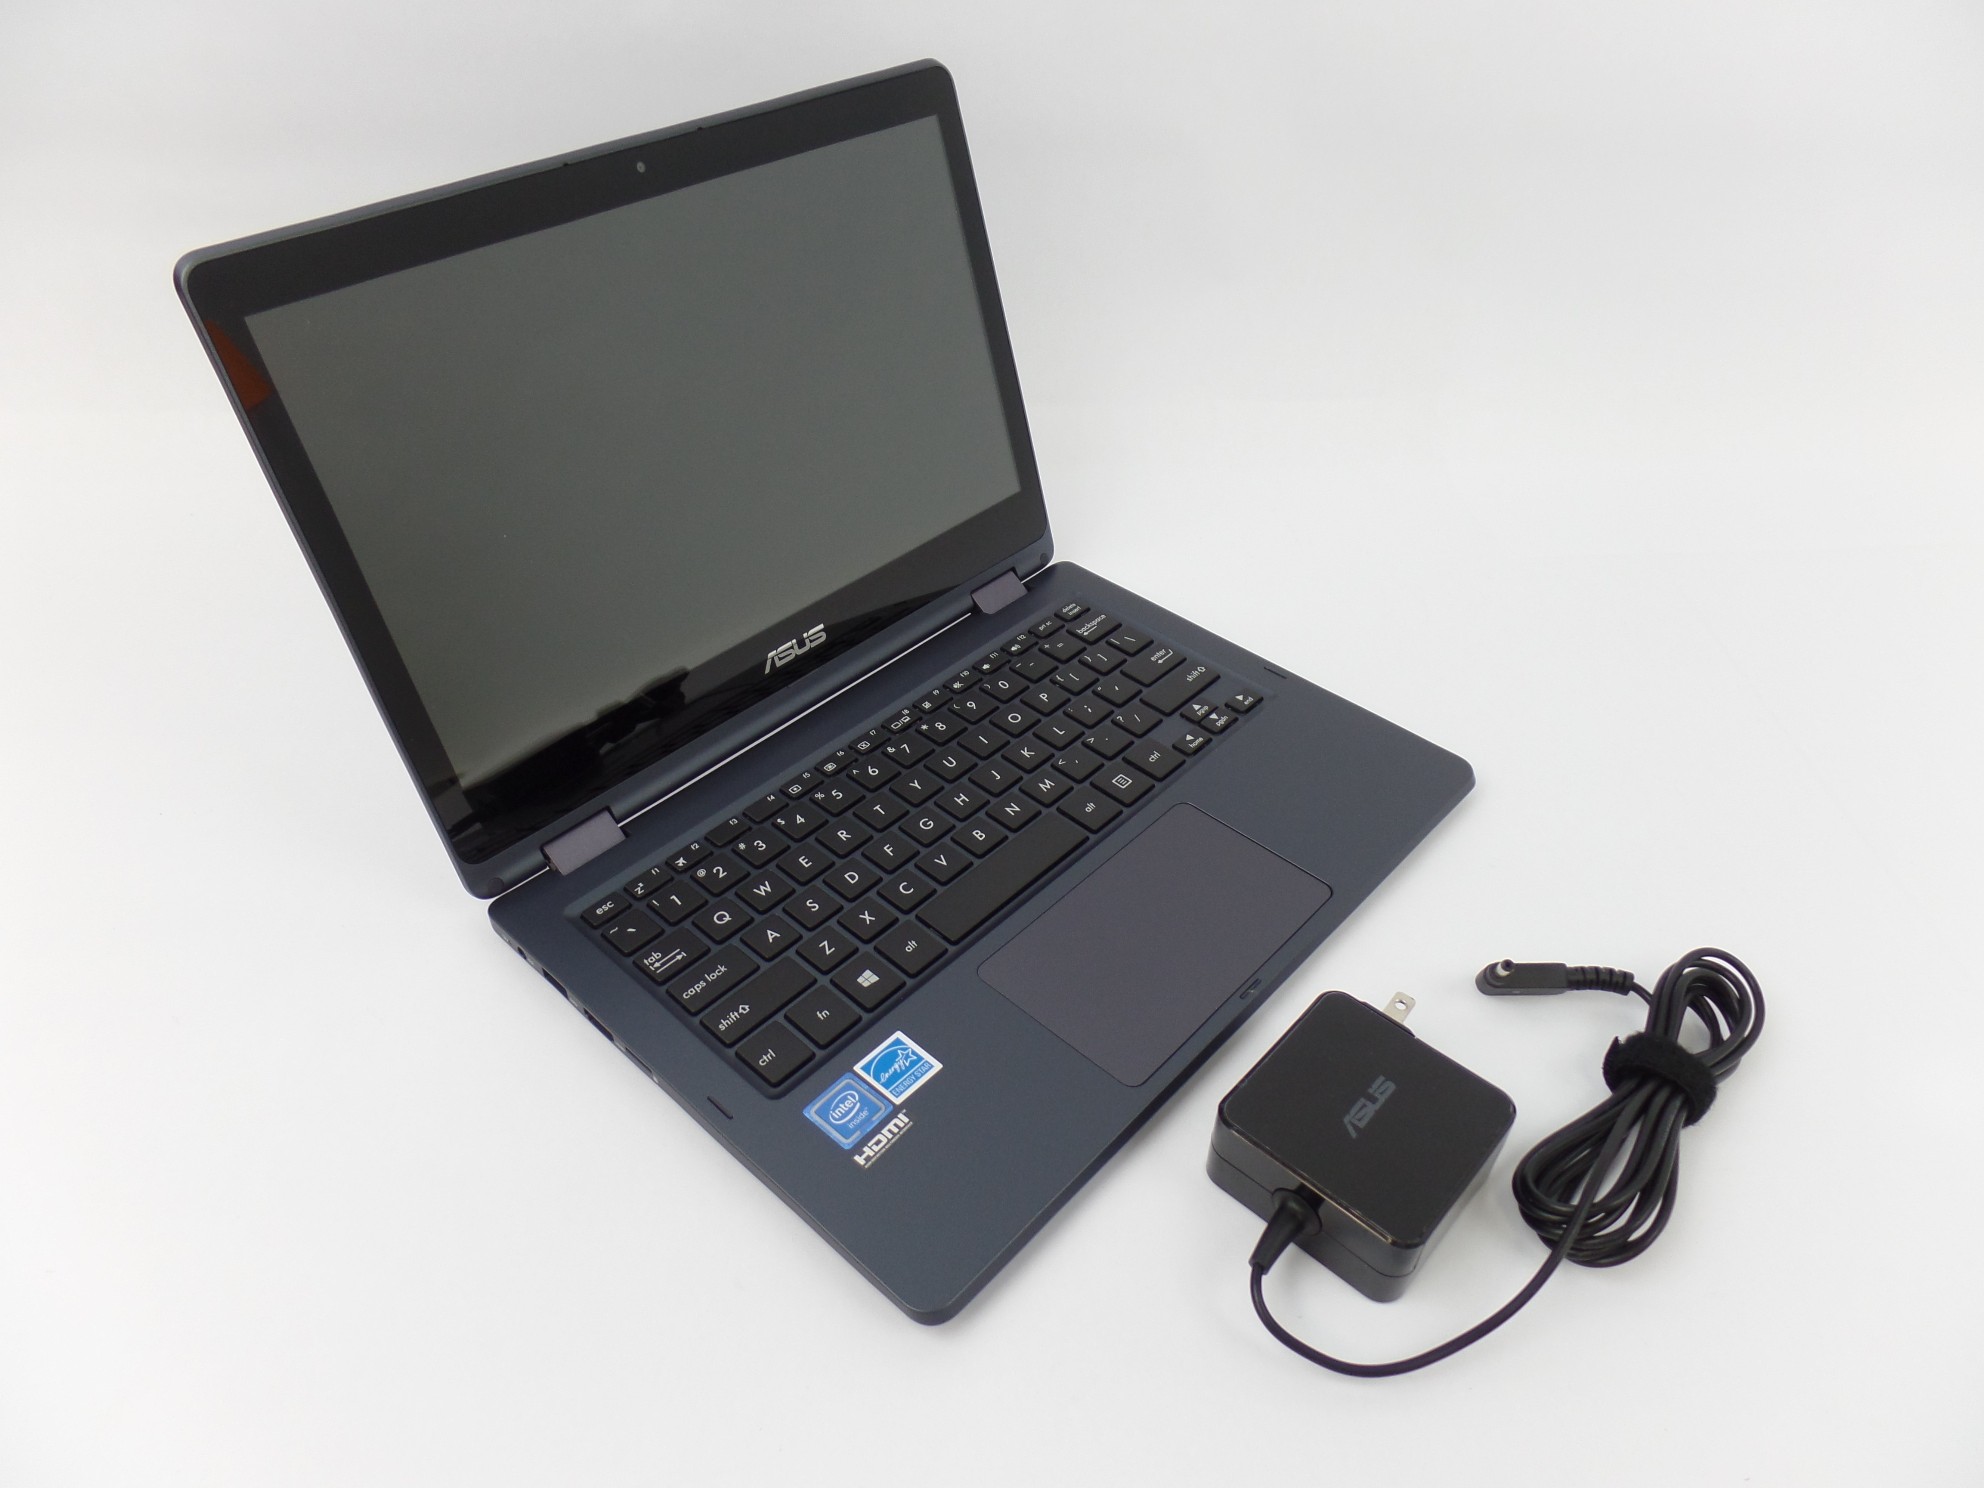 Asus J202NA-DH01T VivoBook Flip 11.6" HD N3350 1.1GHz 4GB 64GB W10H 2in1 Laptop